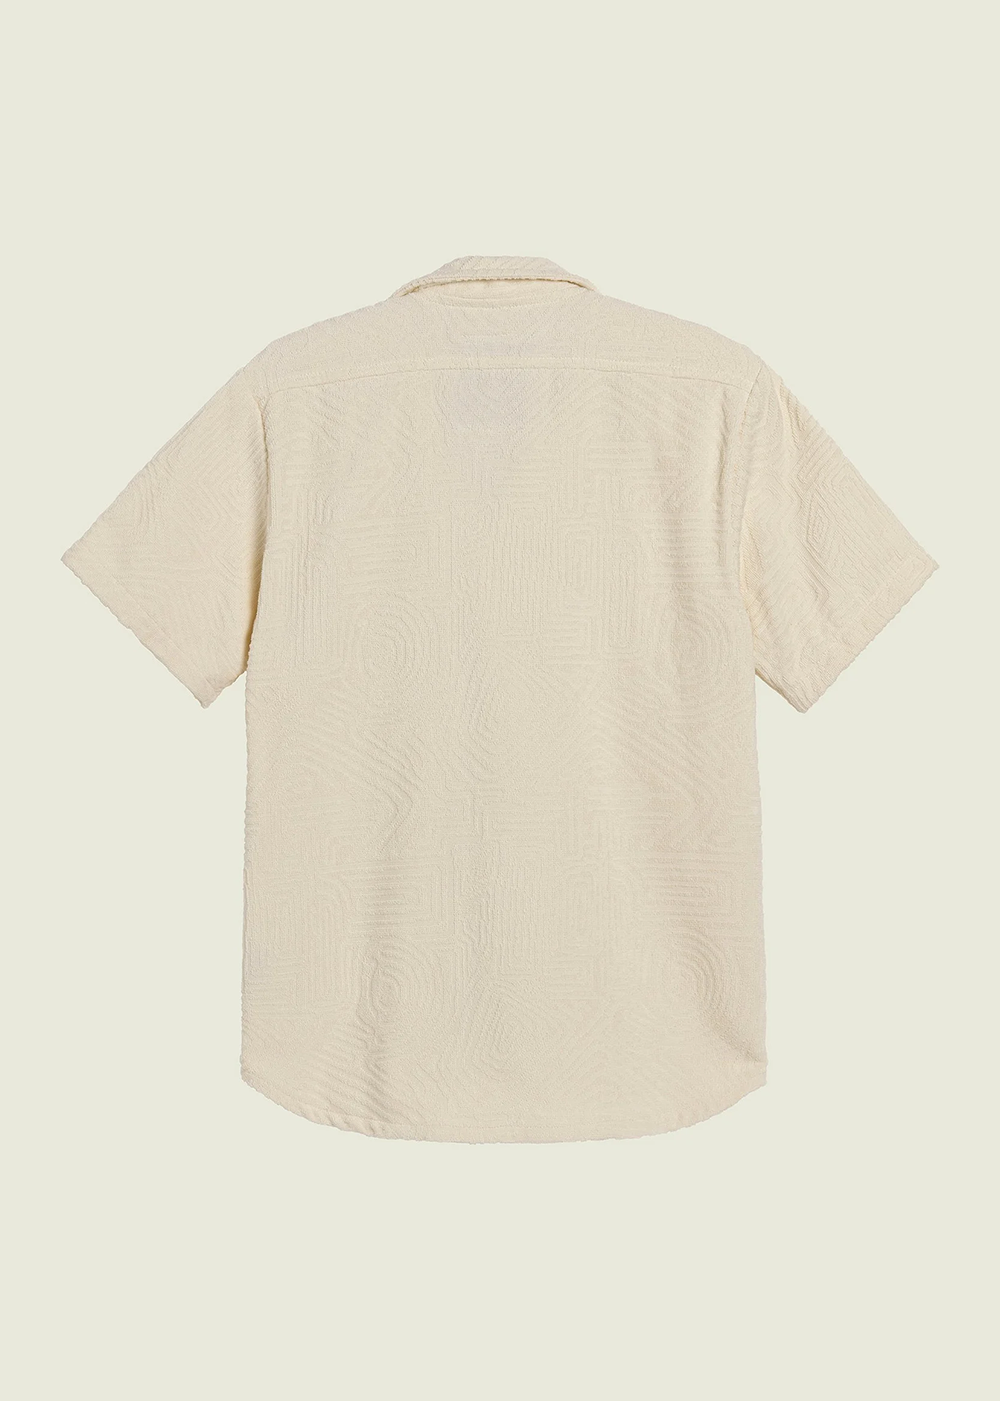 Golconda Cuba Terry Shirt - OAS Company - Danali - 7003-99